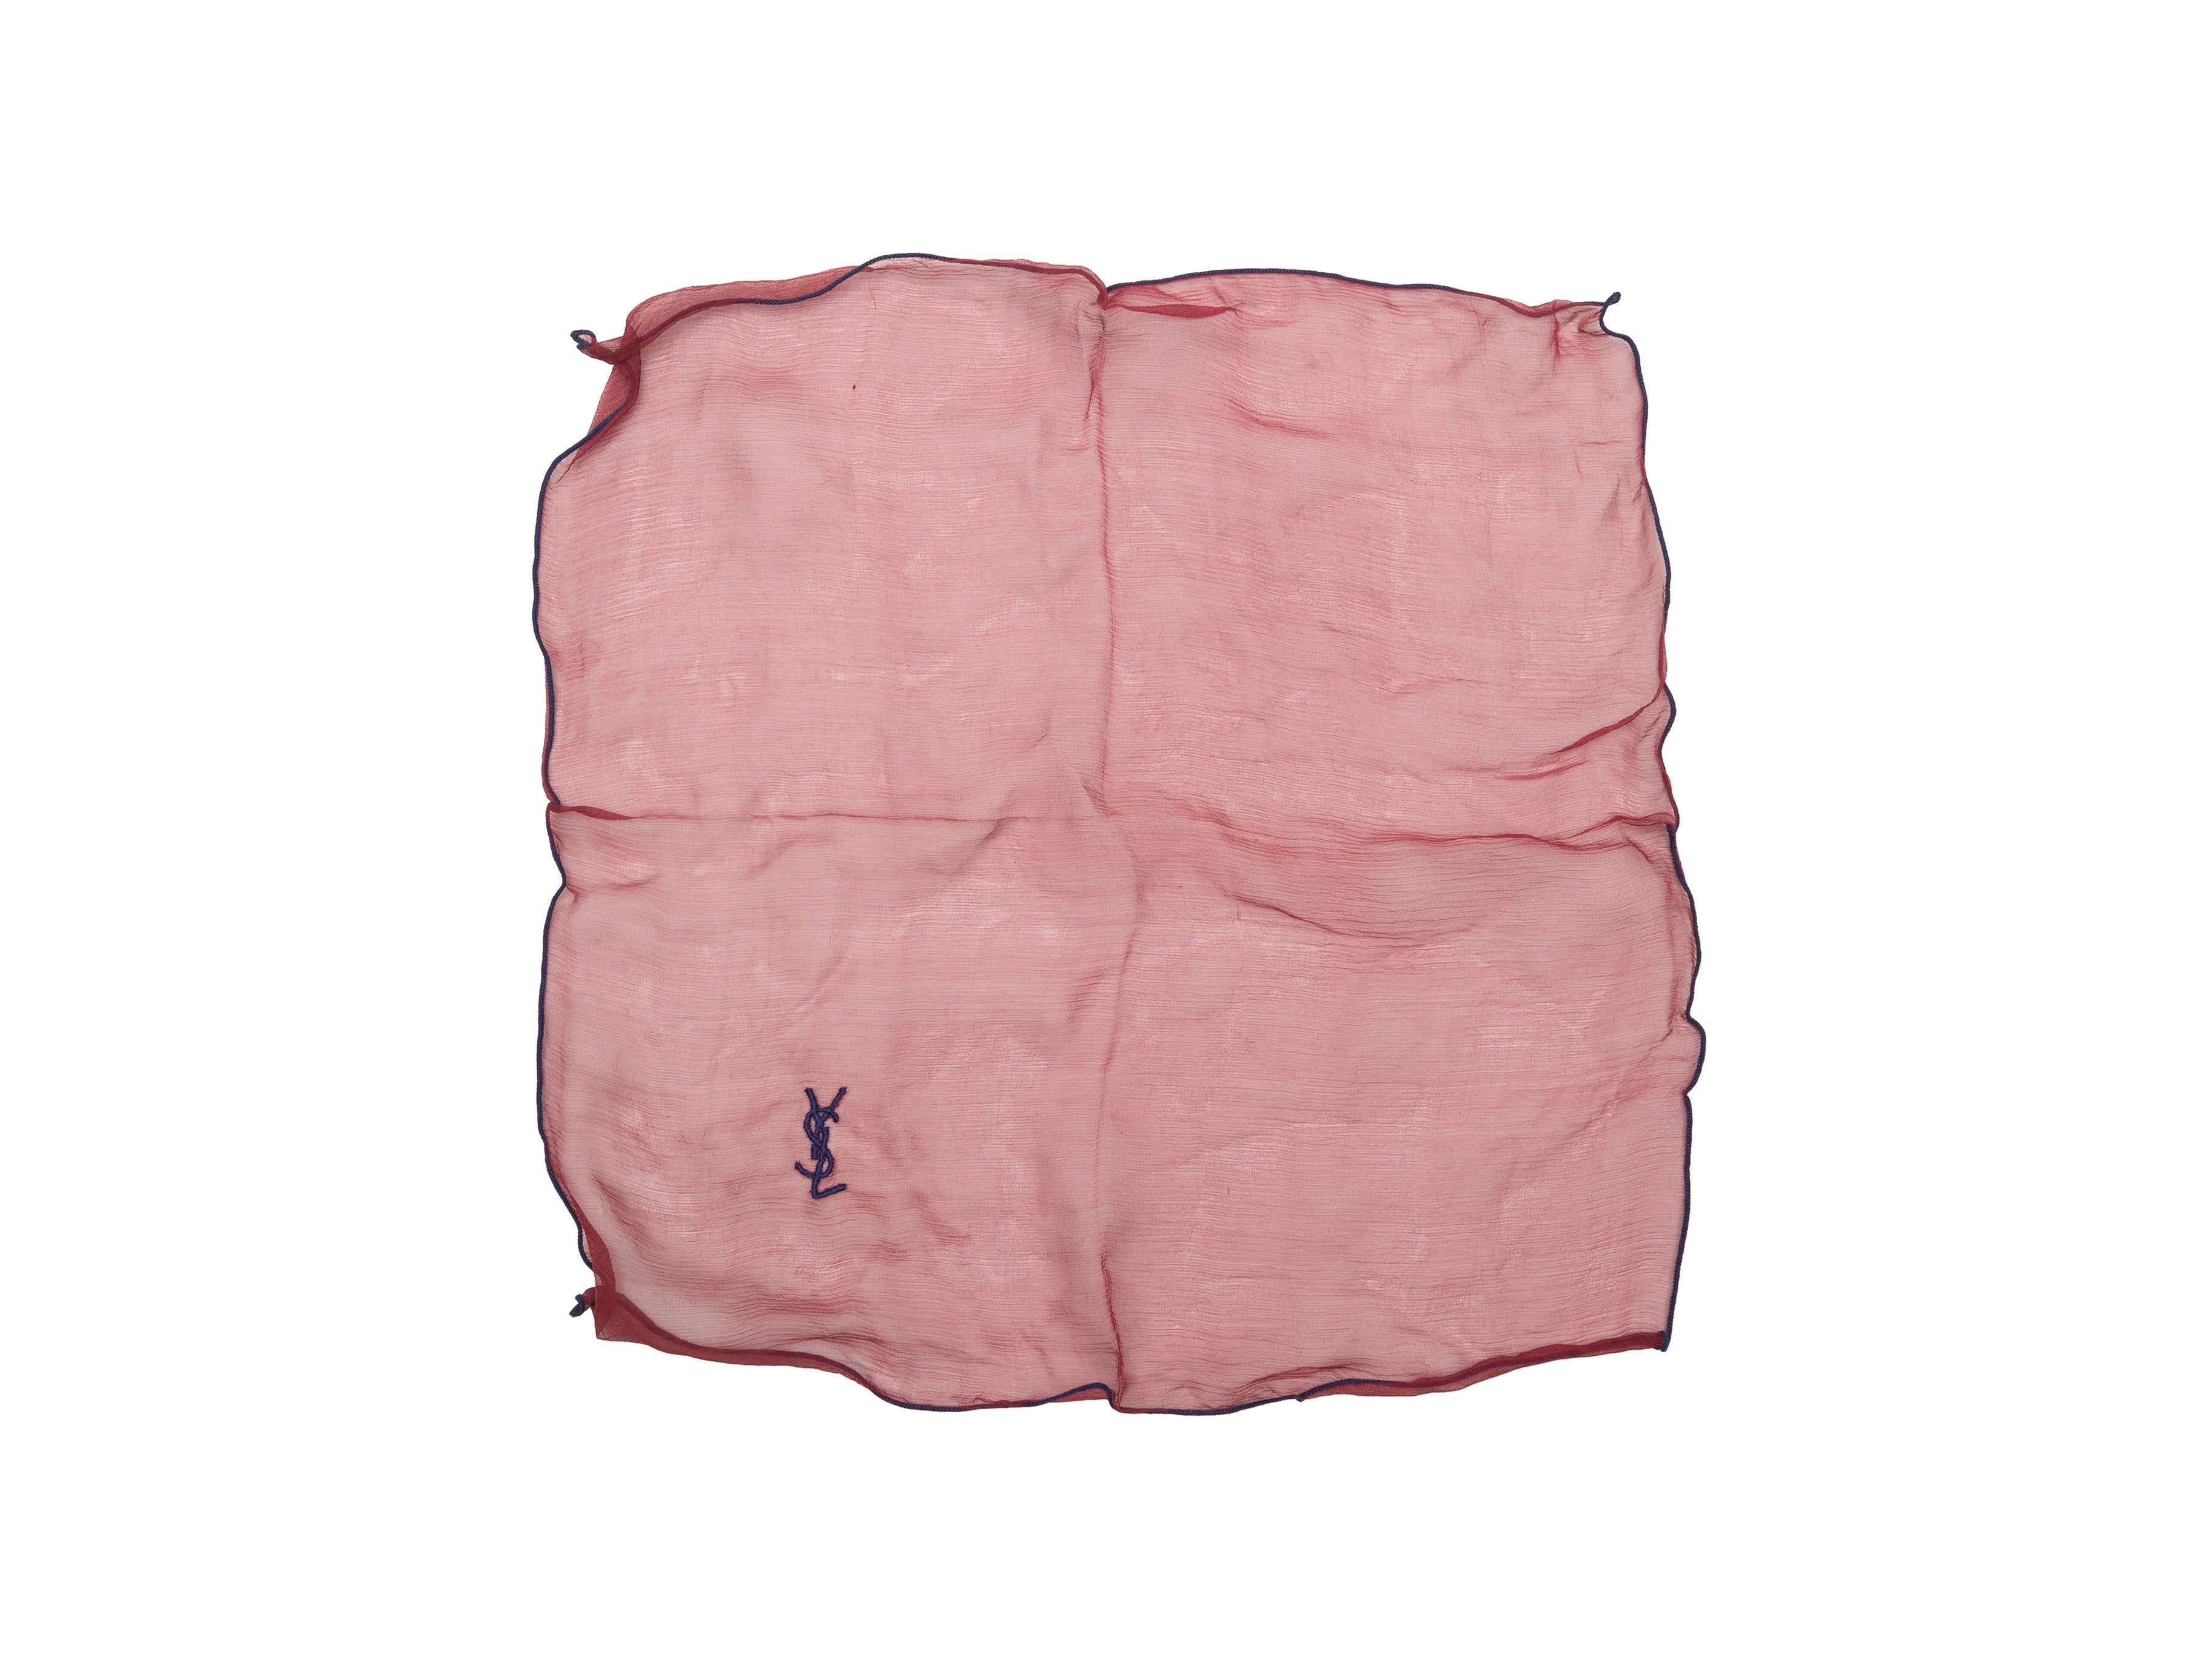 Product details: Vintage maroon sheer silk scarf by Yves Saint Laurent. 15